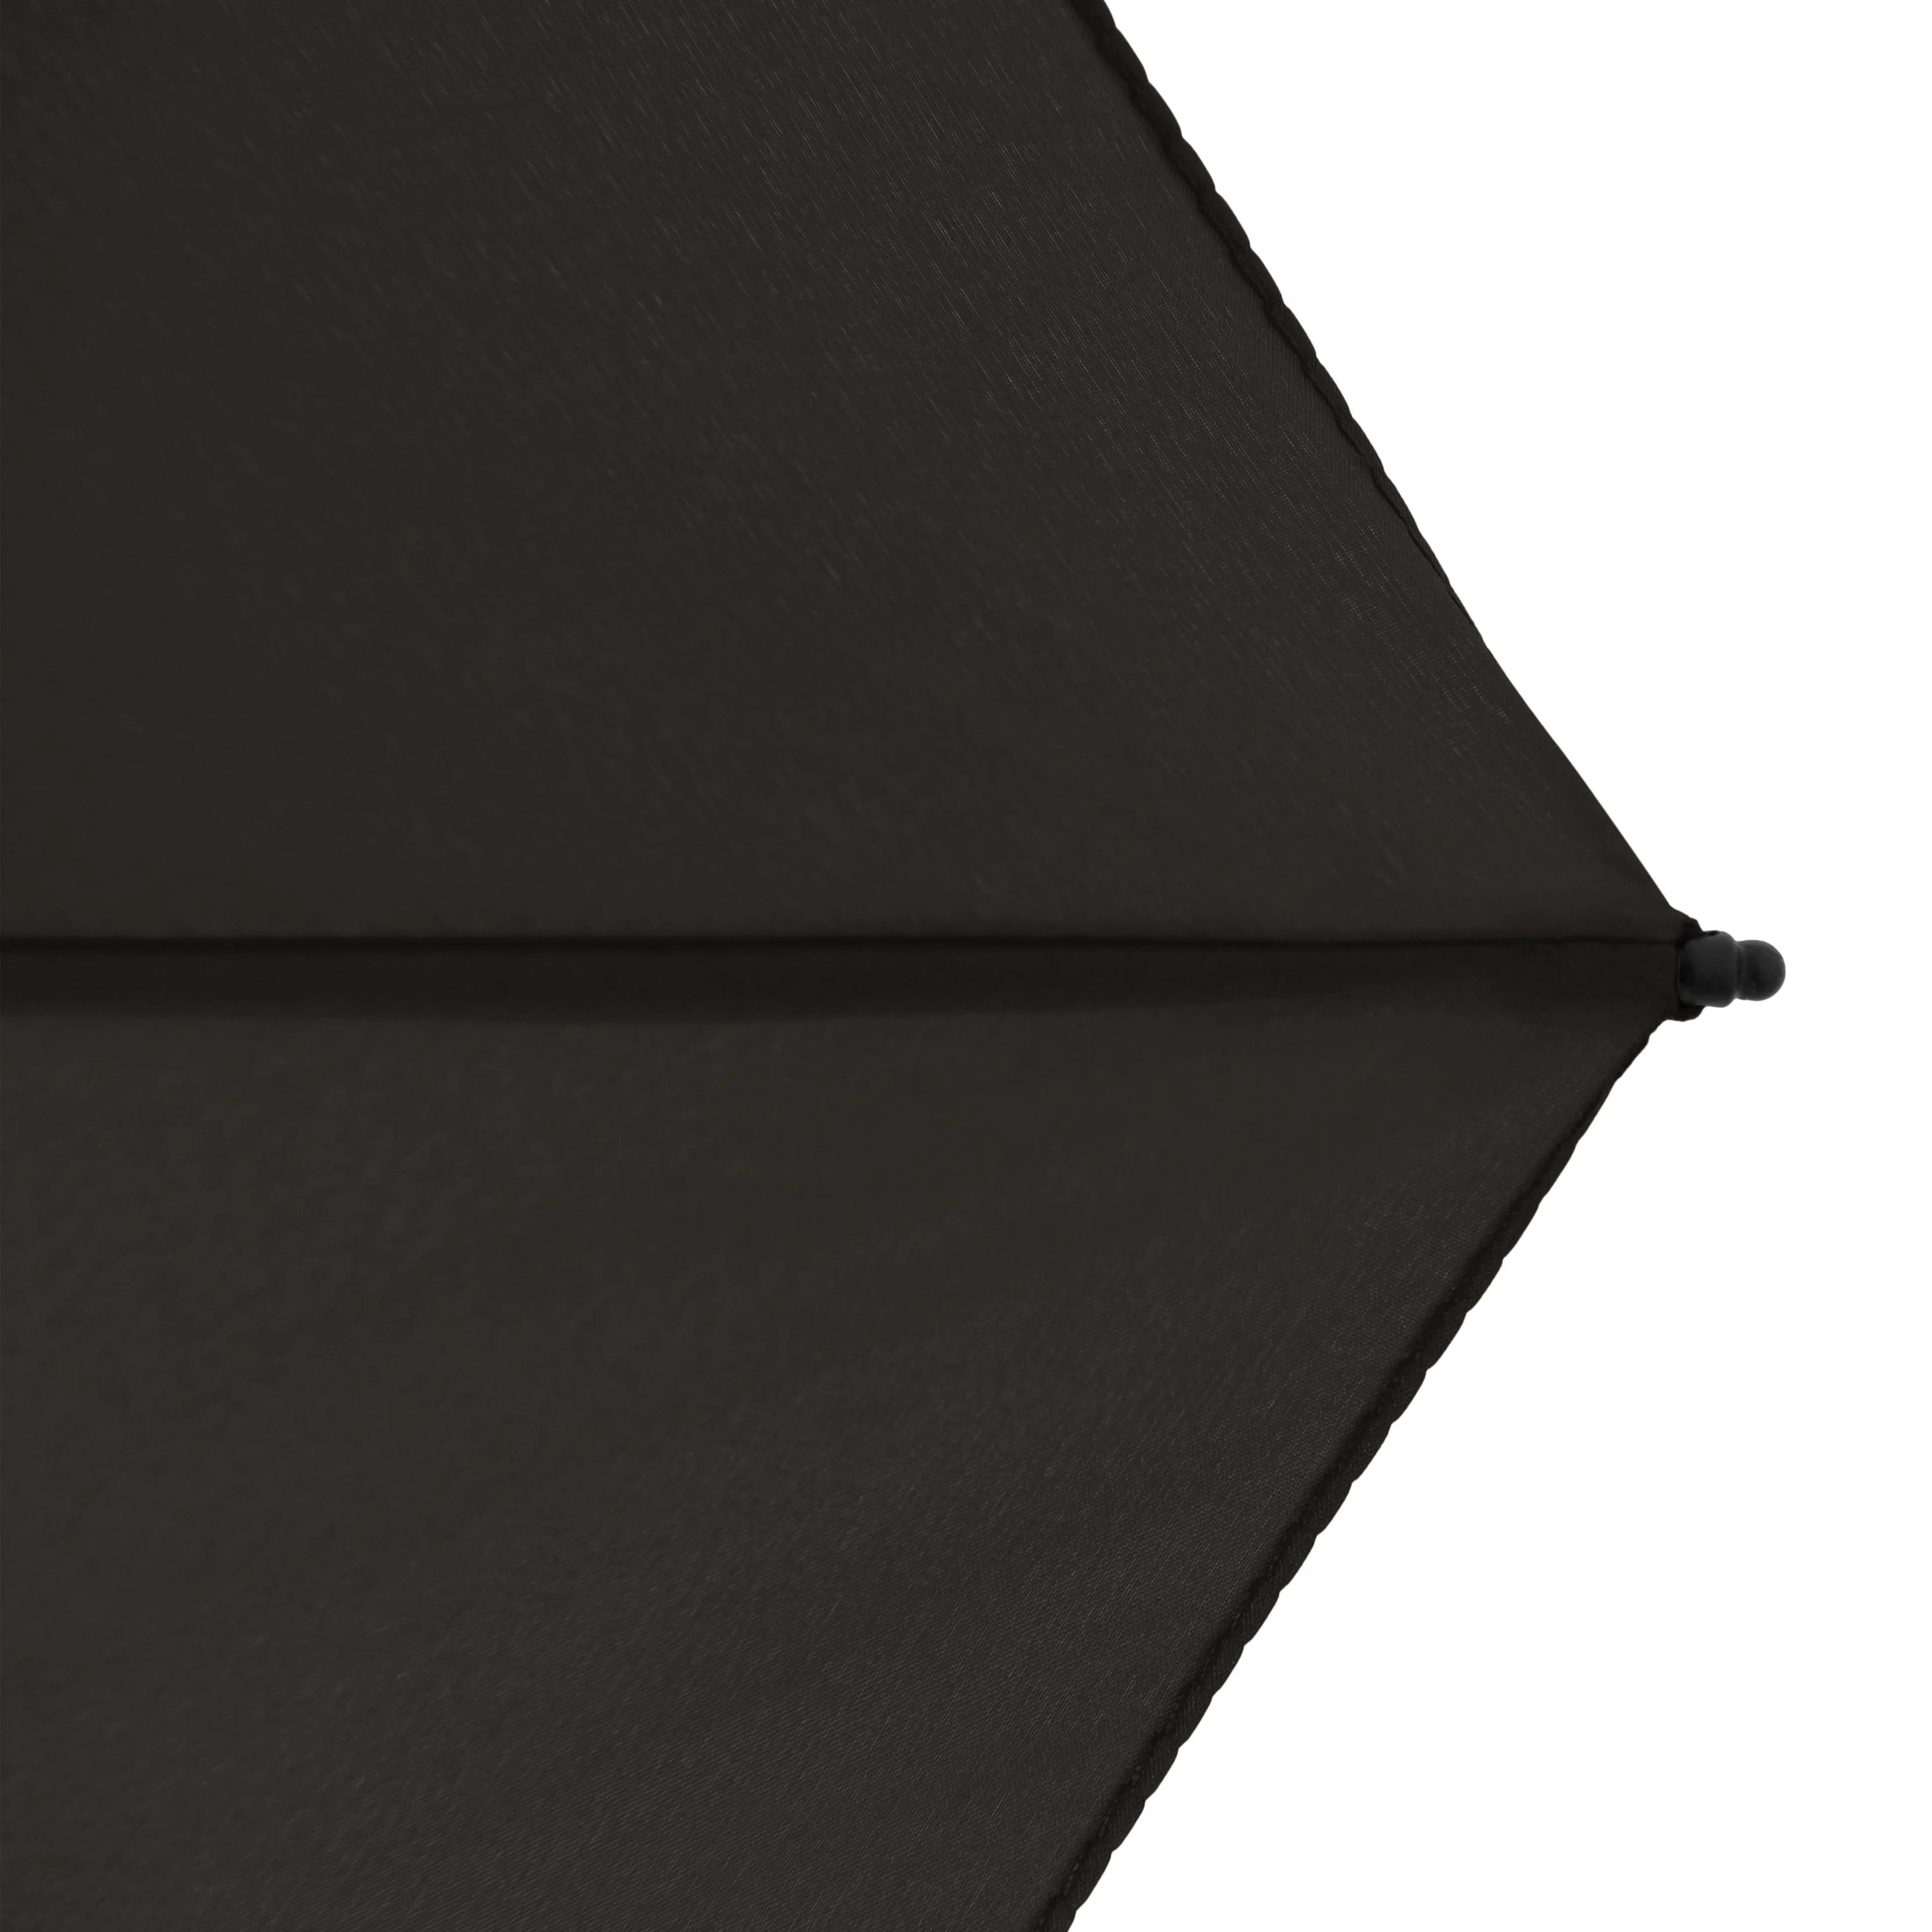 Doppler pocket umbrellas Zero Magic - harmonic beige